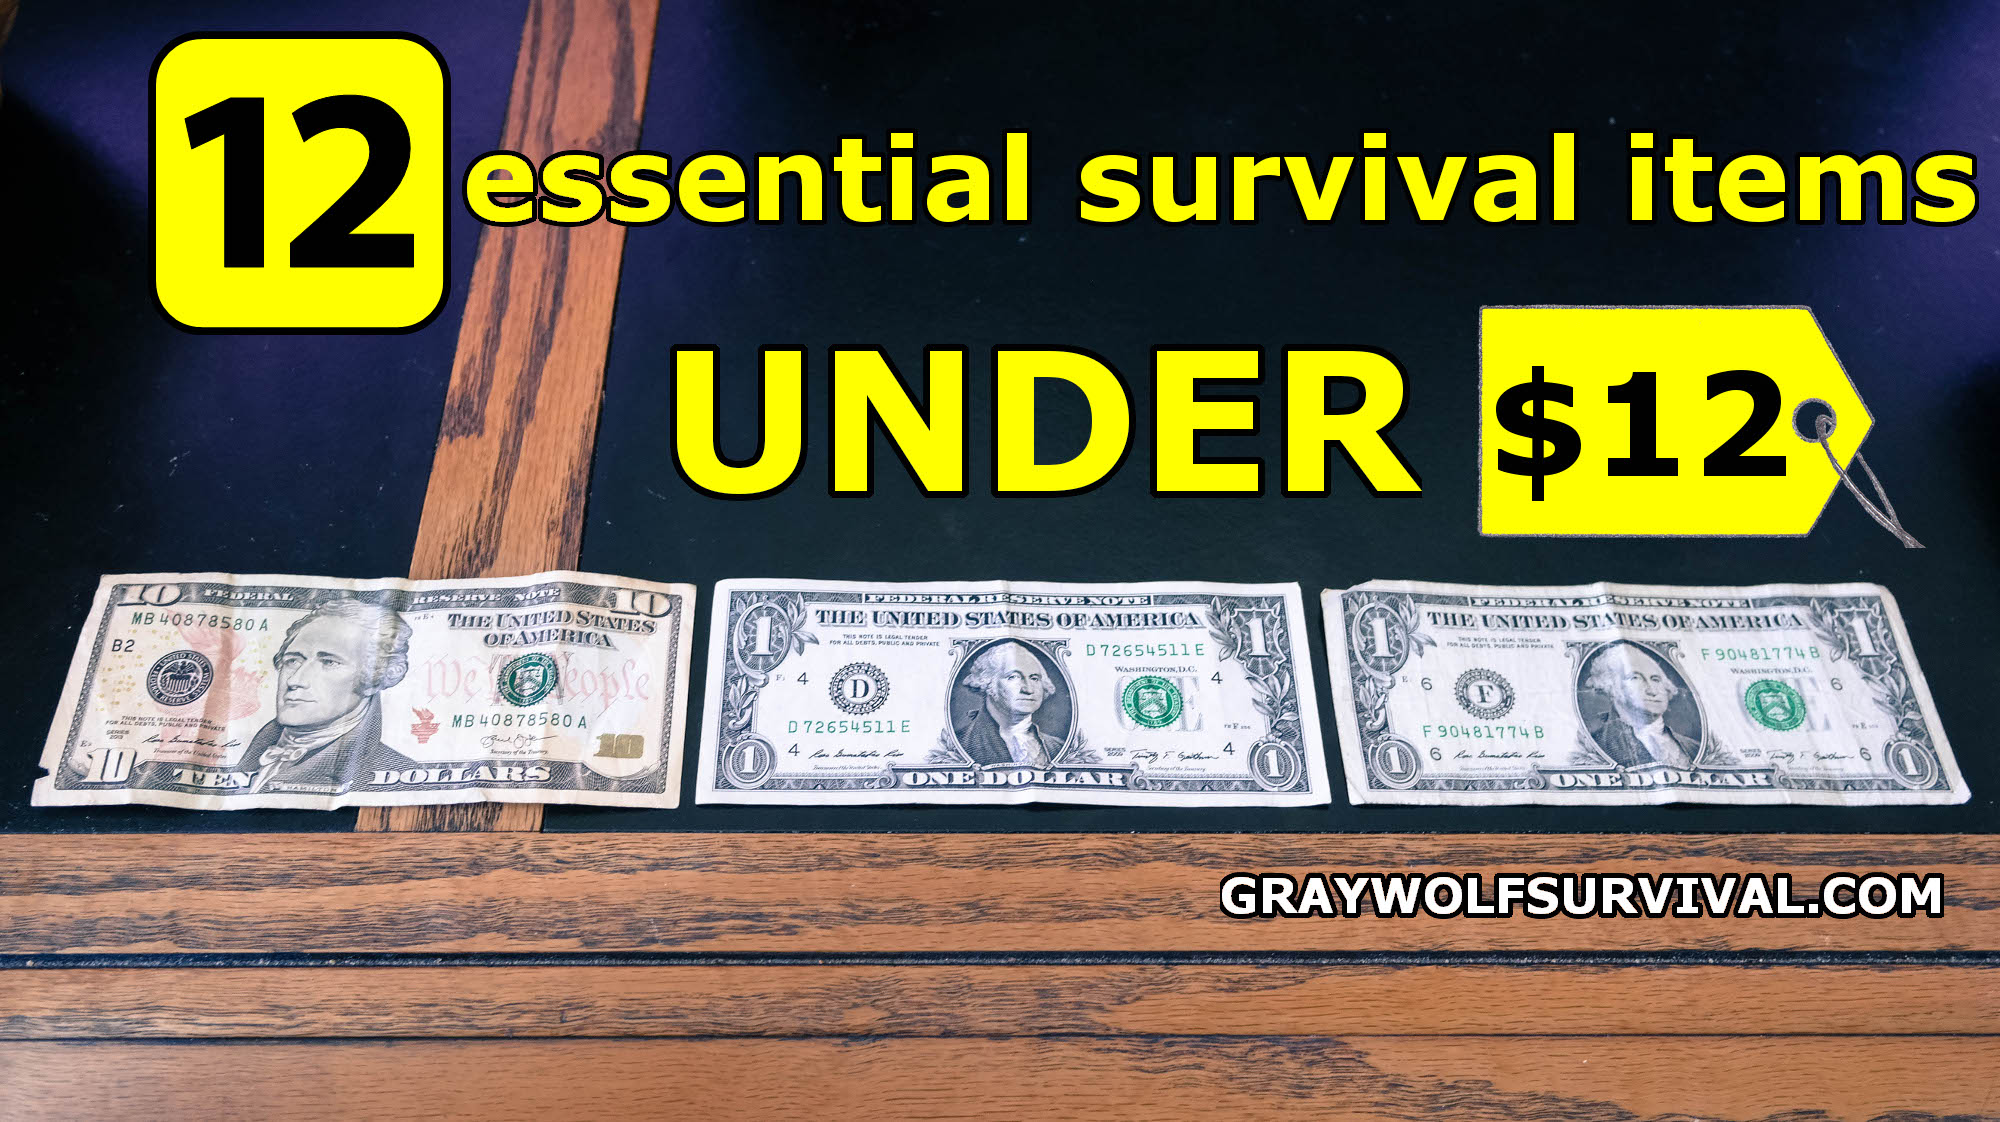 http://graywolfsurvival.com/wp-content/uploads/2014/09/12-essential-survival-items-under-12.jpg